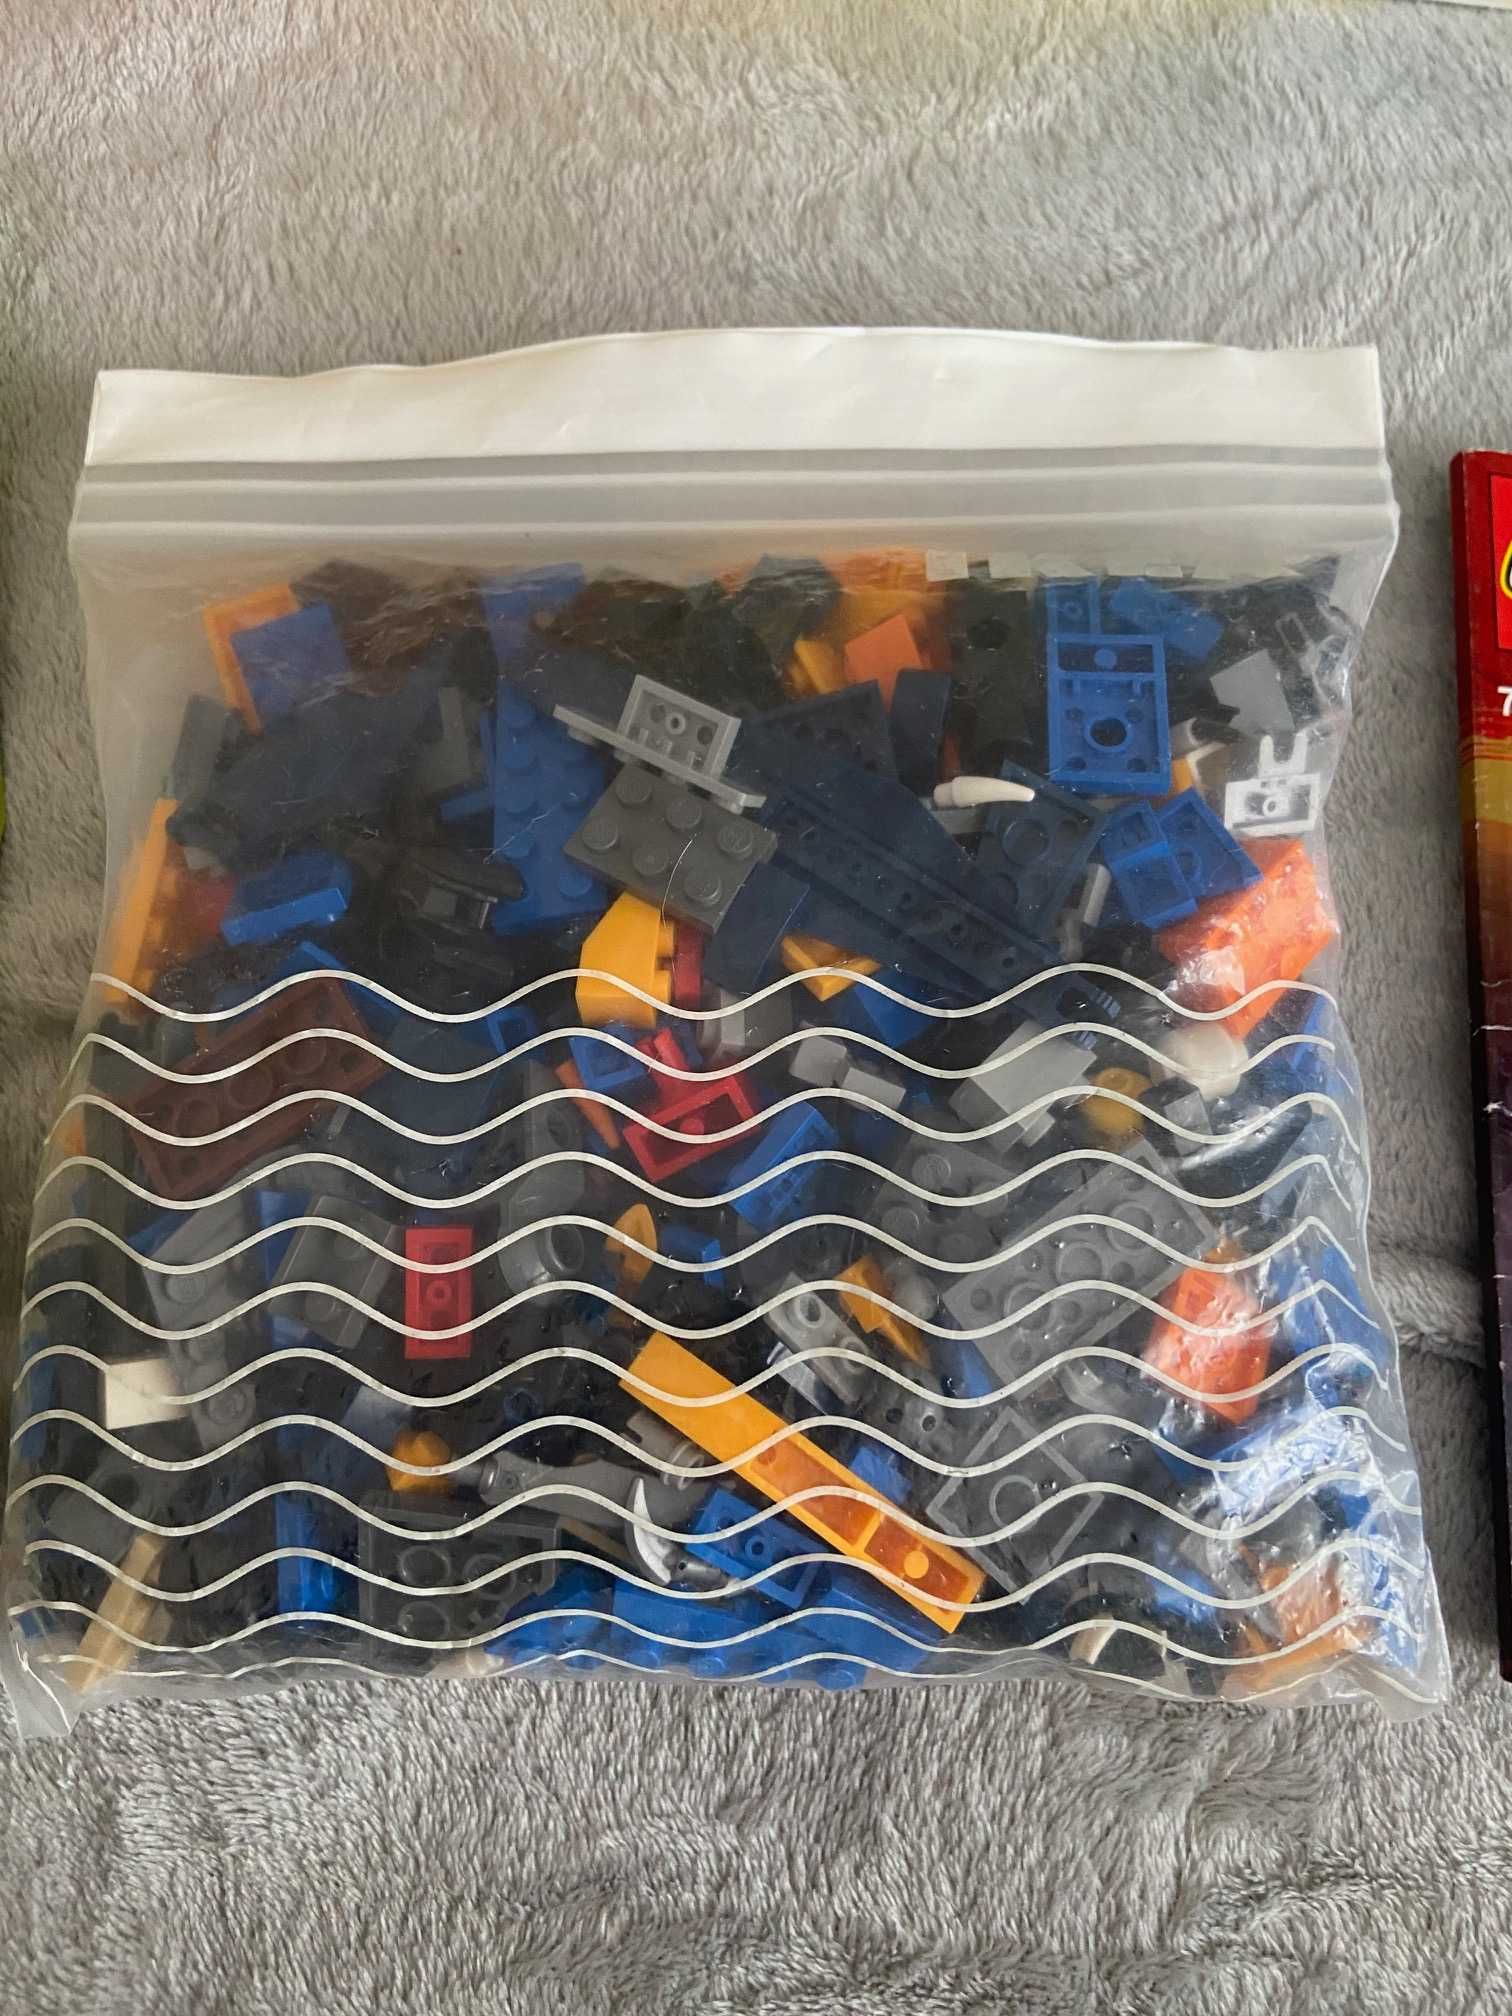 Лего робот Lego boost 5 in 1 и Лего ninjago stormbringer